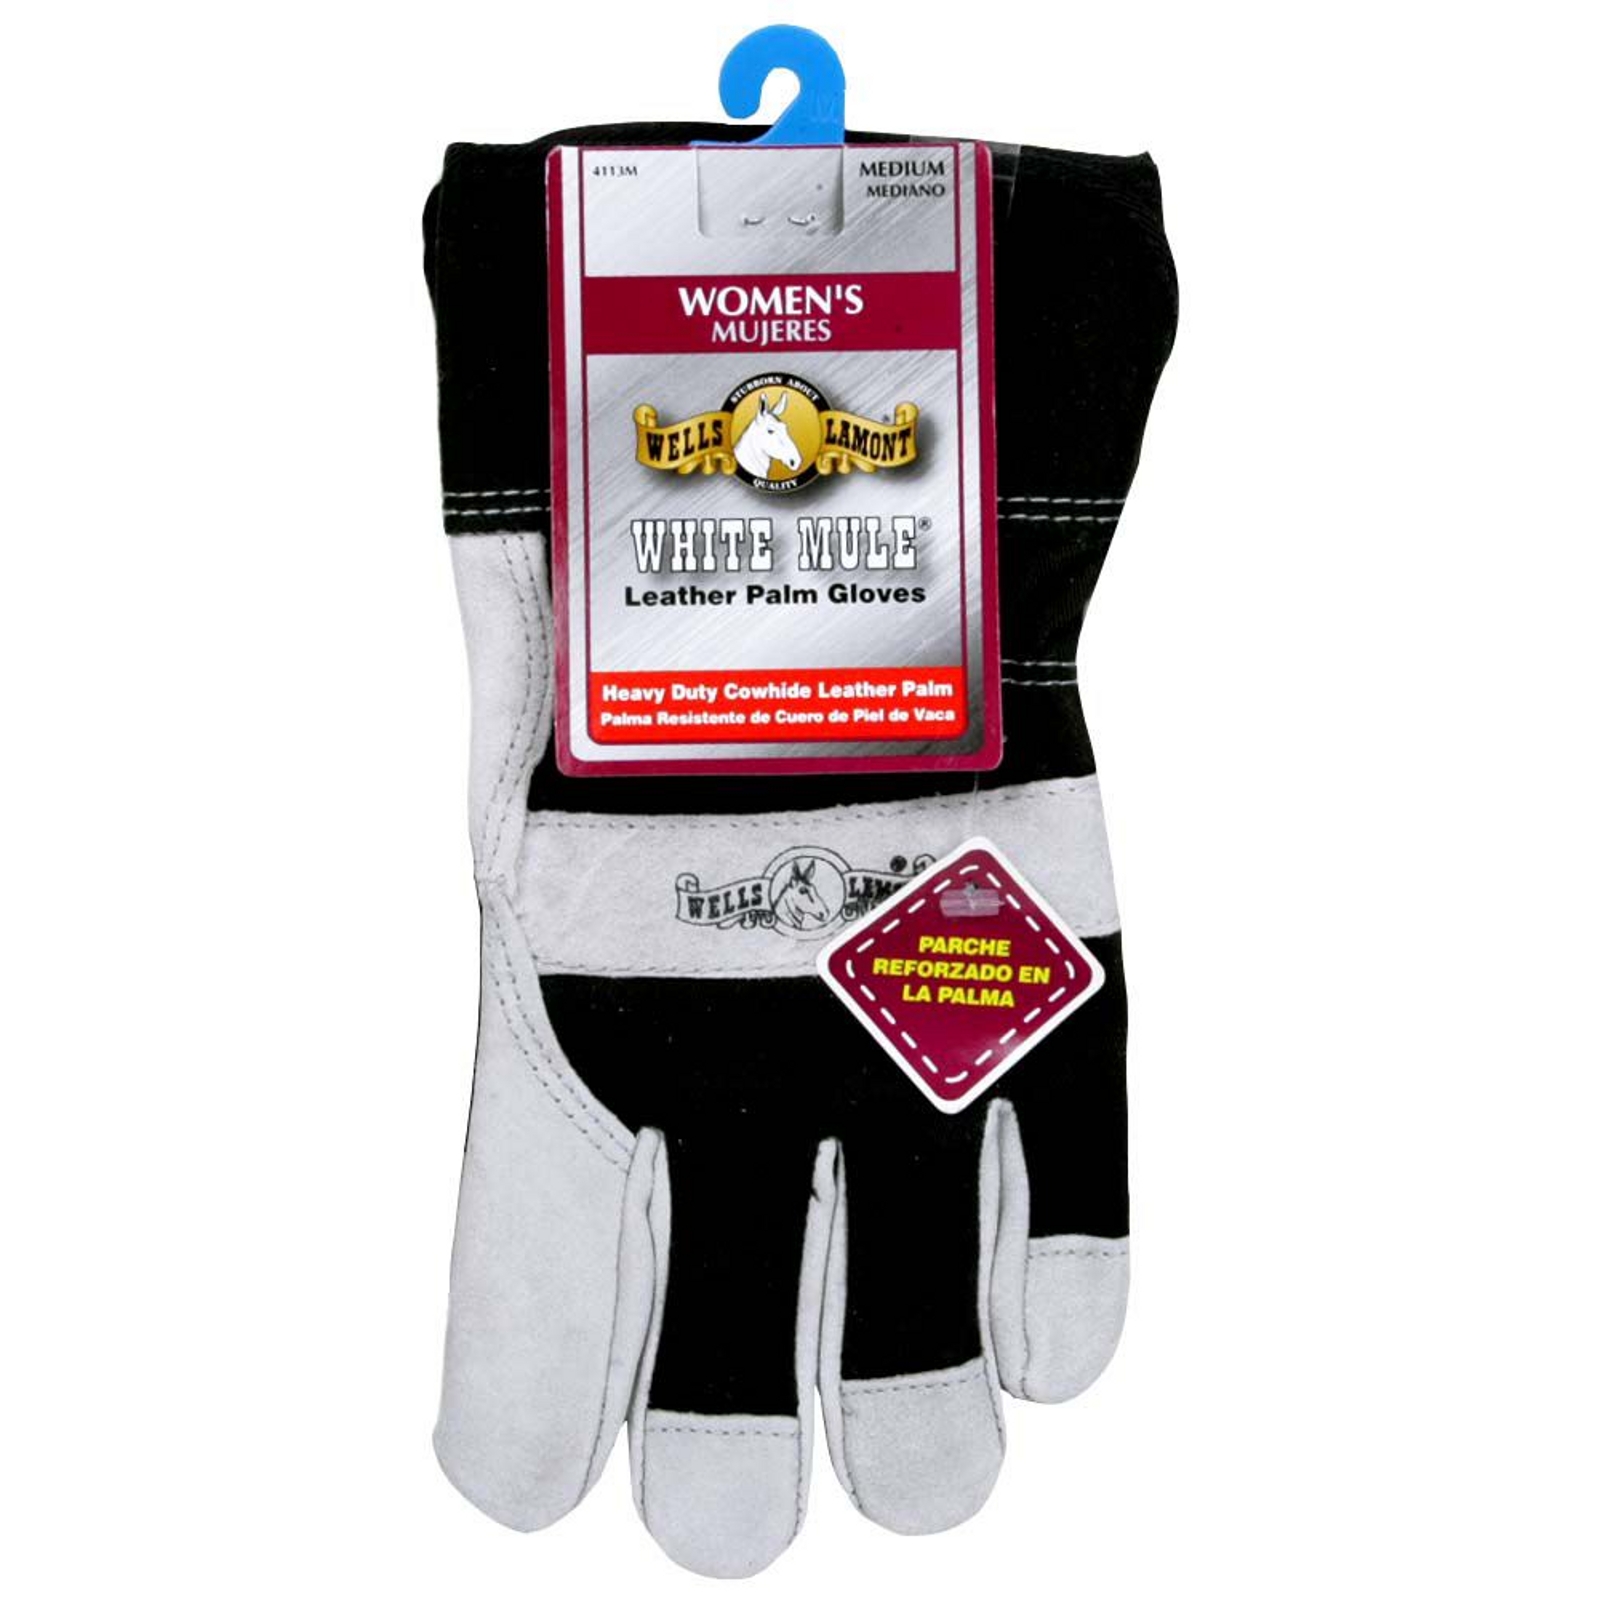 Wells Lamont 4113M White Mule Leather Palm Gloves, Women's, Medium, 1 pair